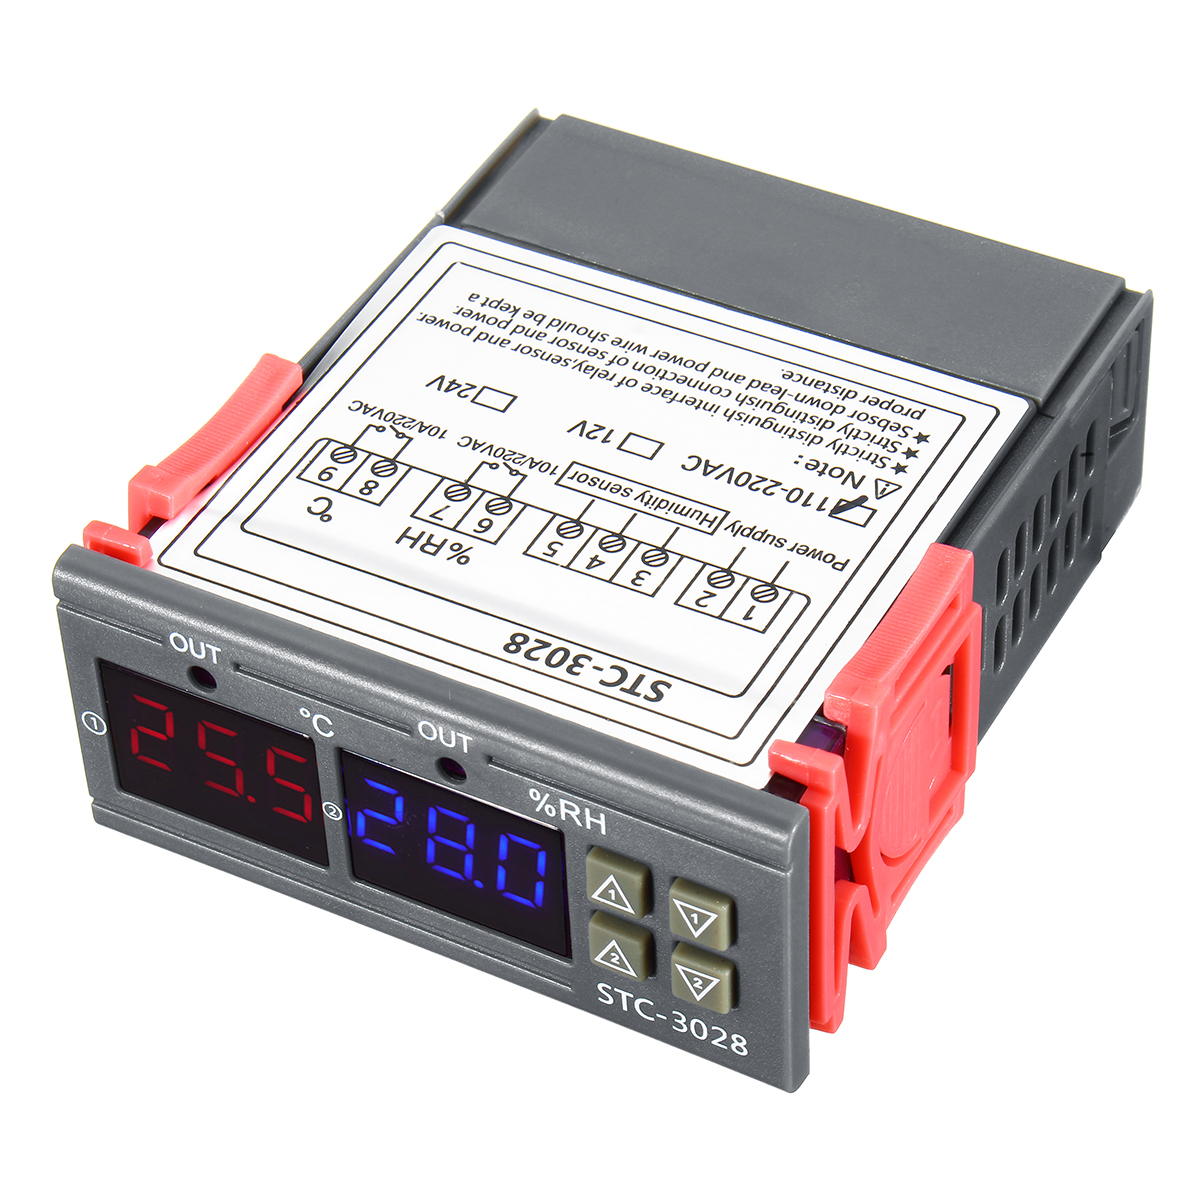 

110-220V STC-3018 Цифровой регулятор температуры термостата с настройкой значения функции Дисплей C / F Преобразование